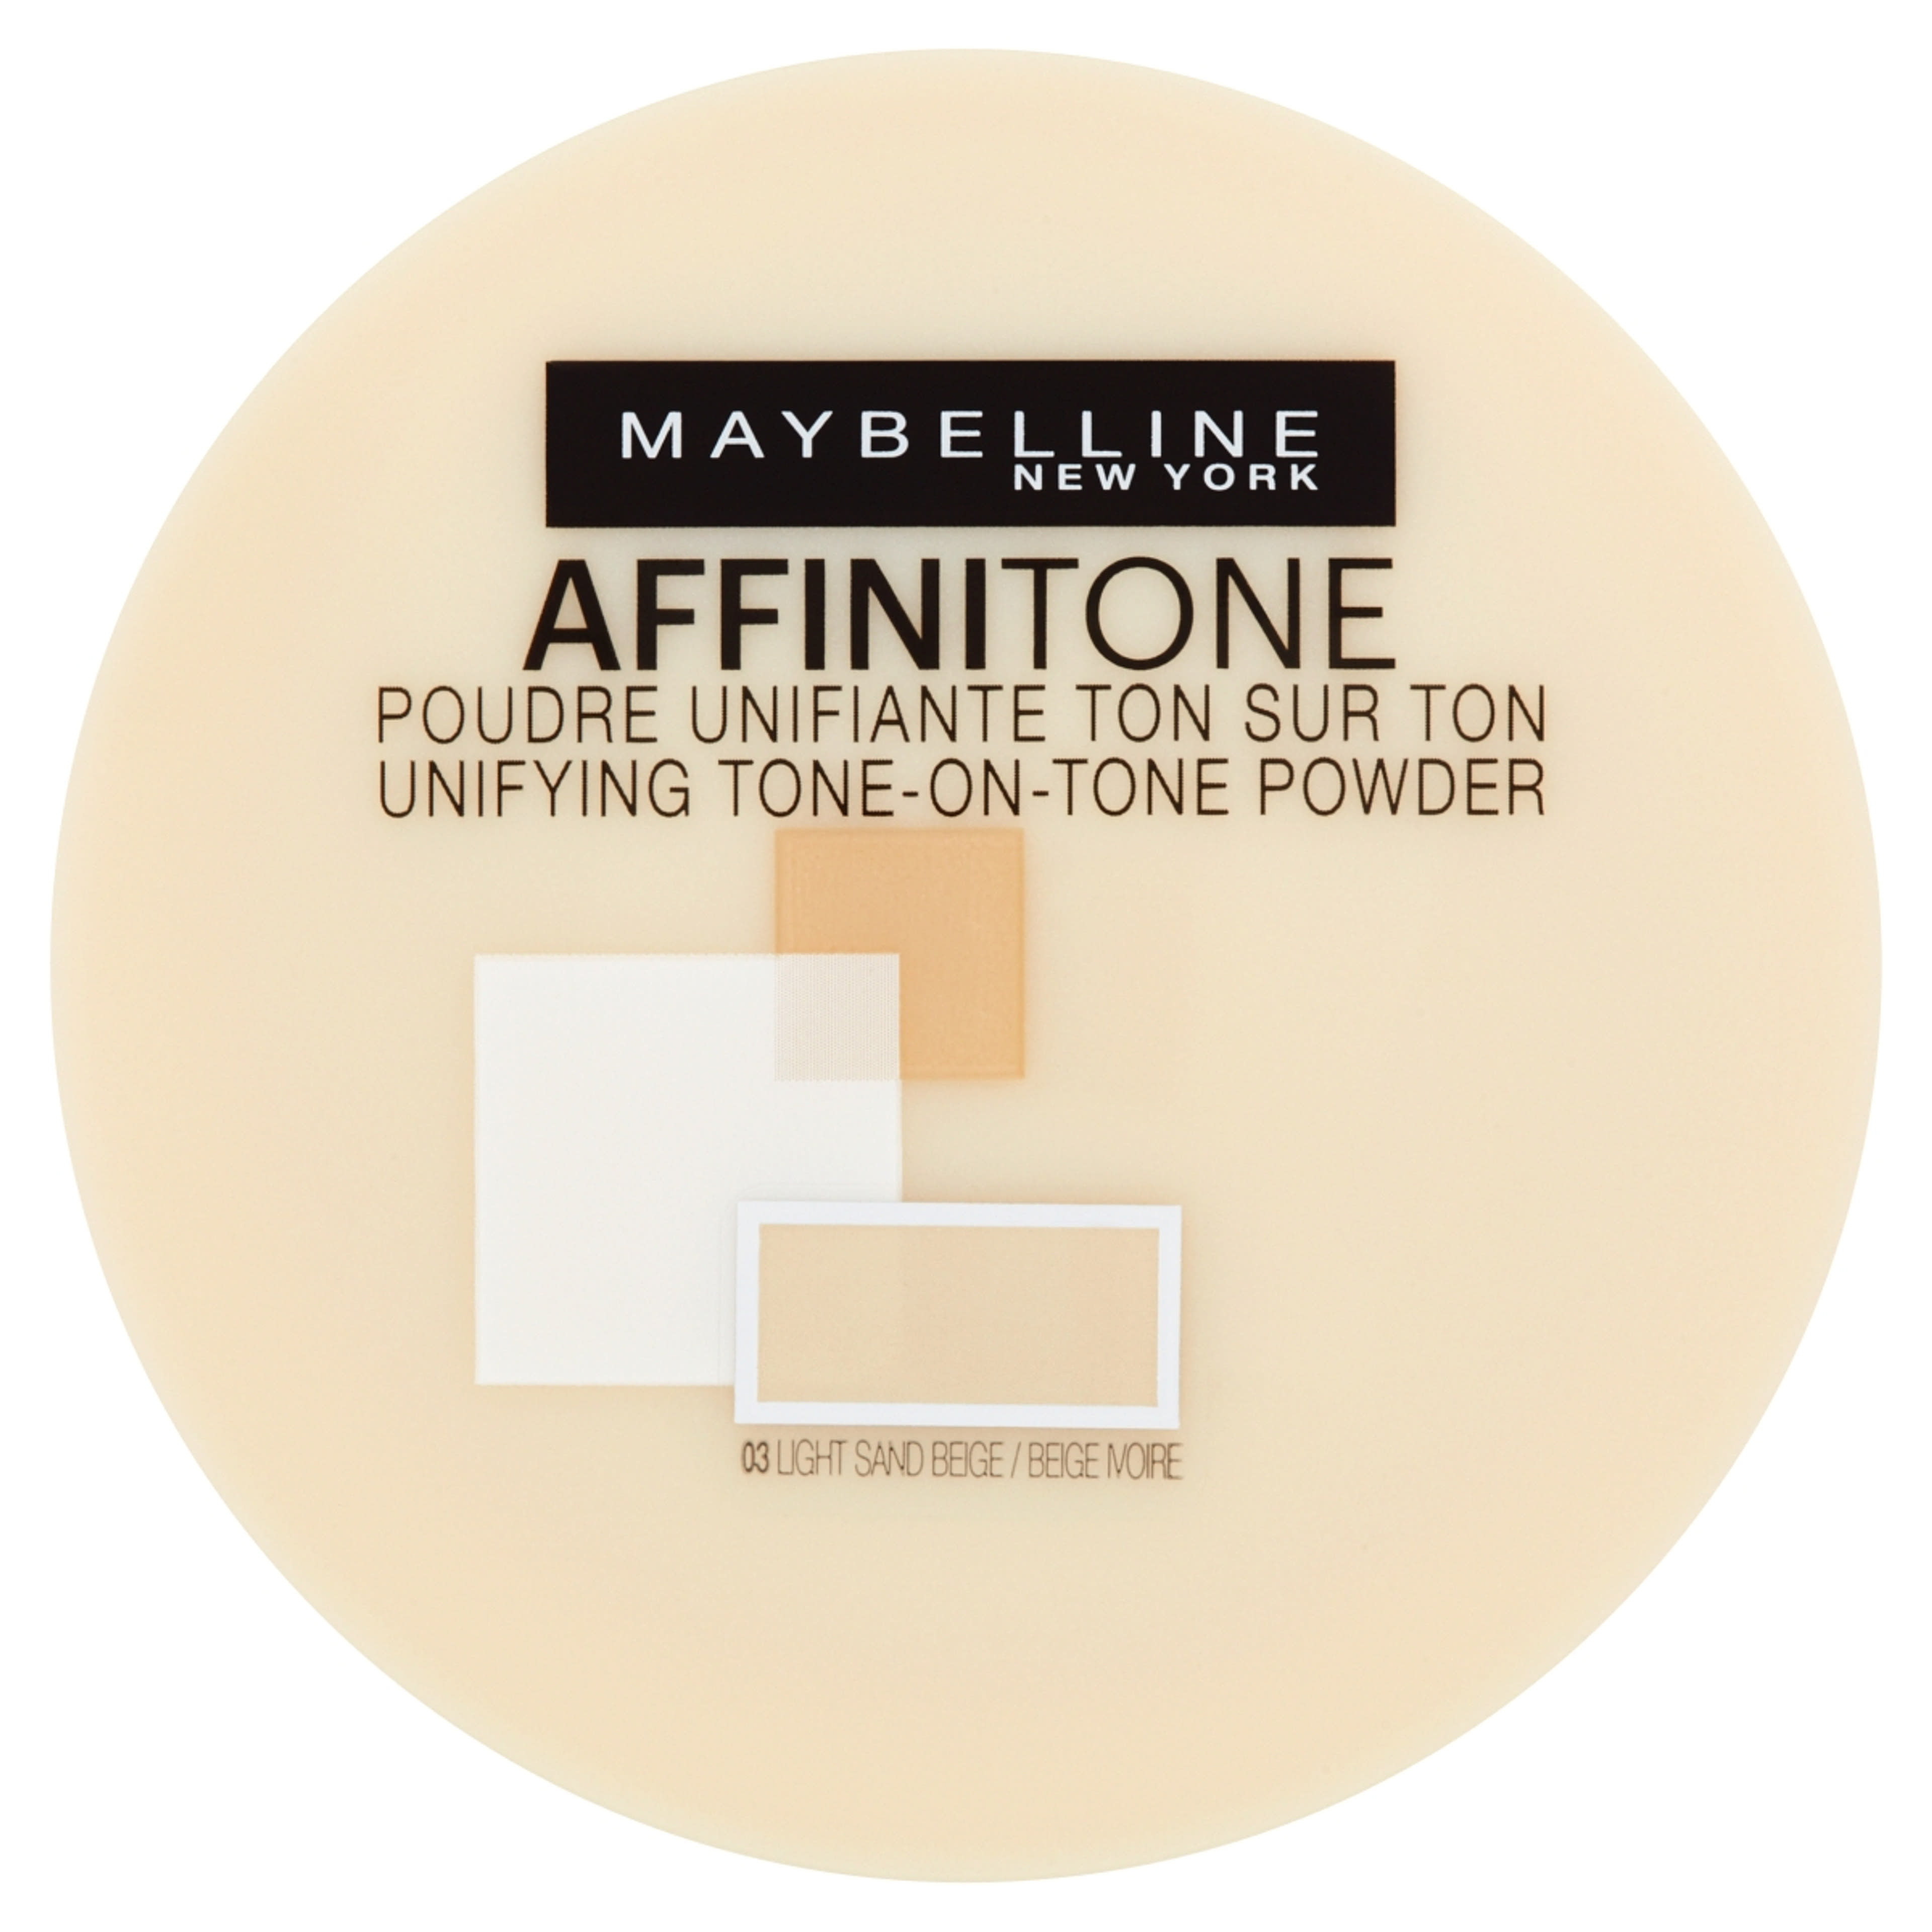 Maybelline Affinitone púder, 03 Light Sand Beige - 1 db